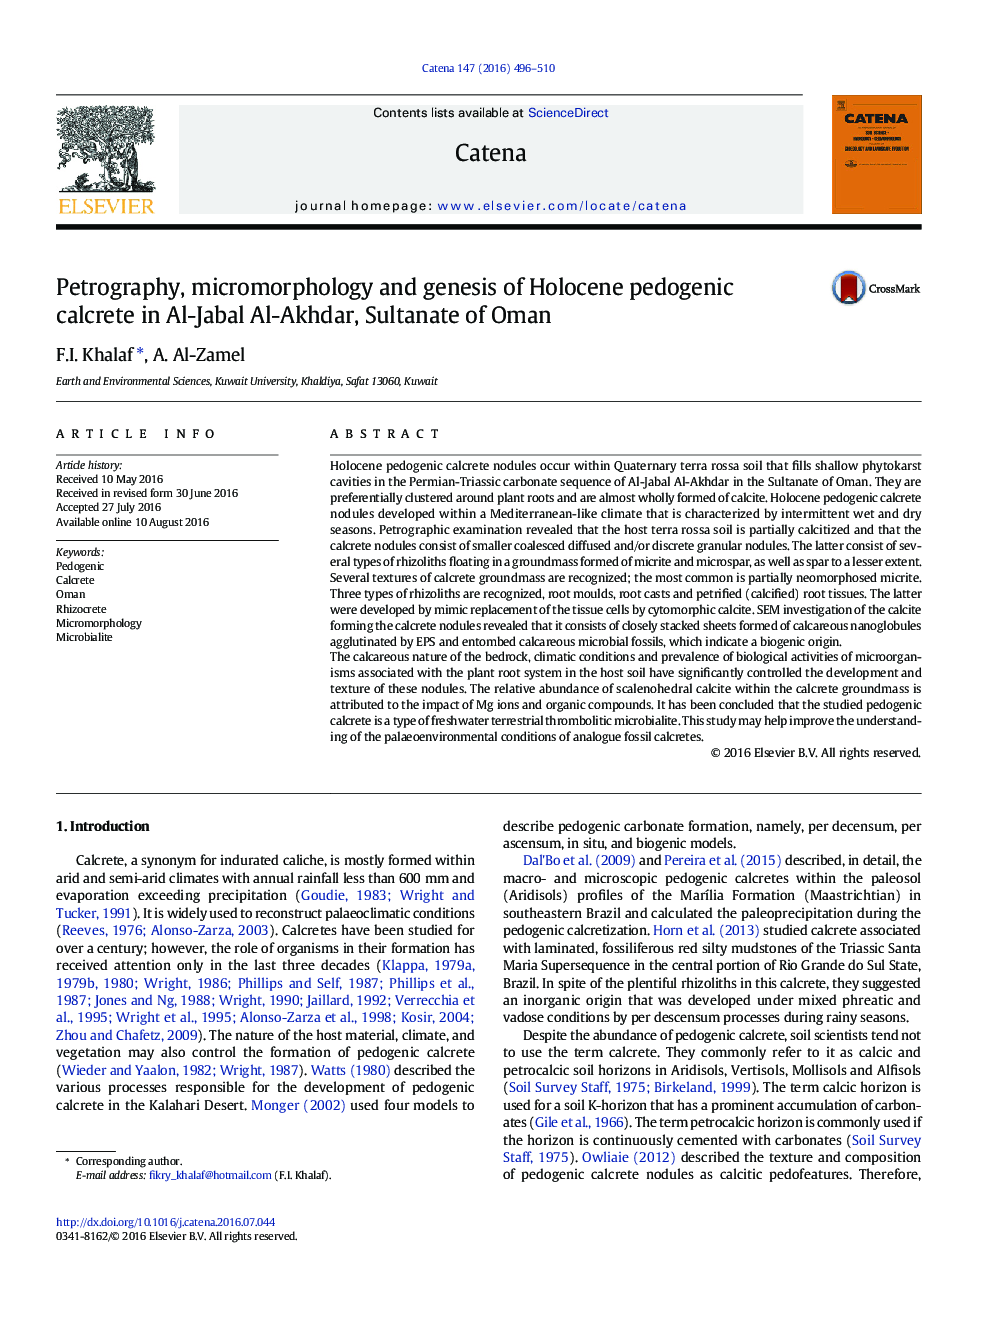 Petrography, micromorphology and genesis of Holocene pedogenic calcrete in Al-Jabal Al-Akhdar, Sultanate of Oman